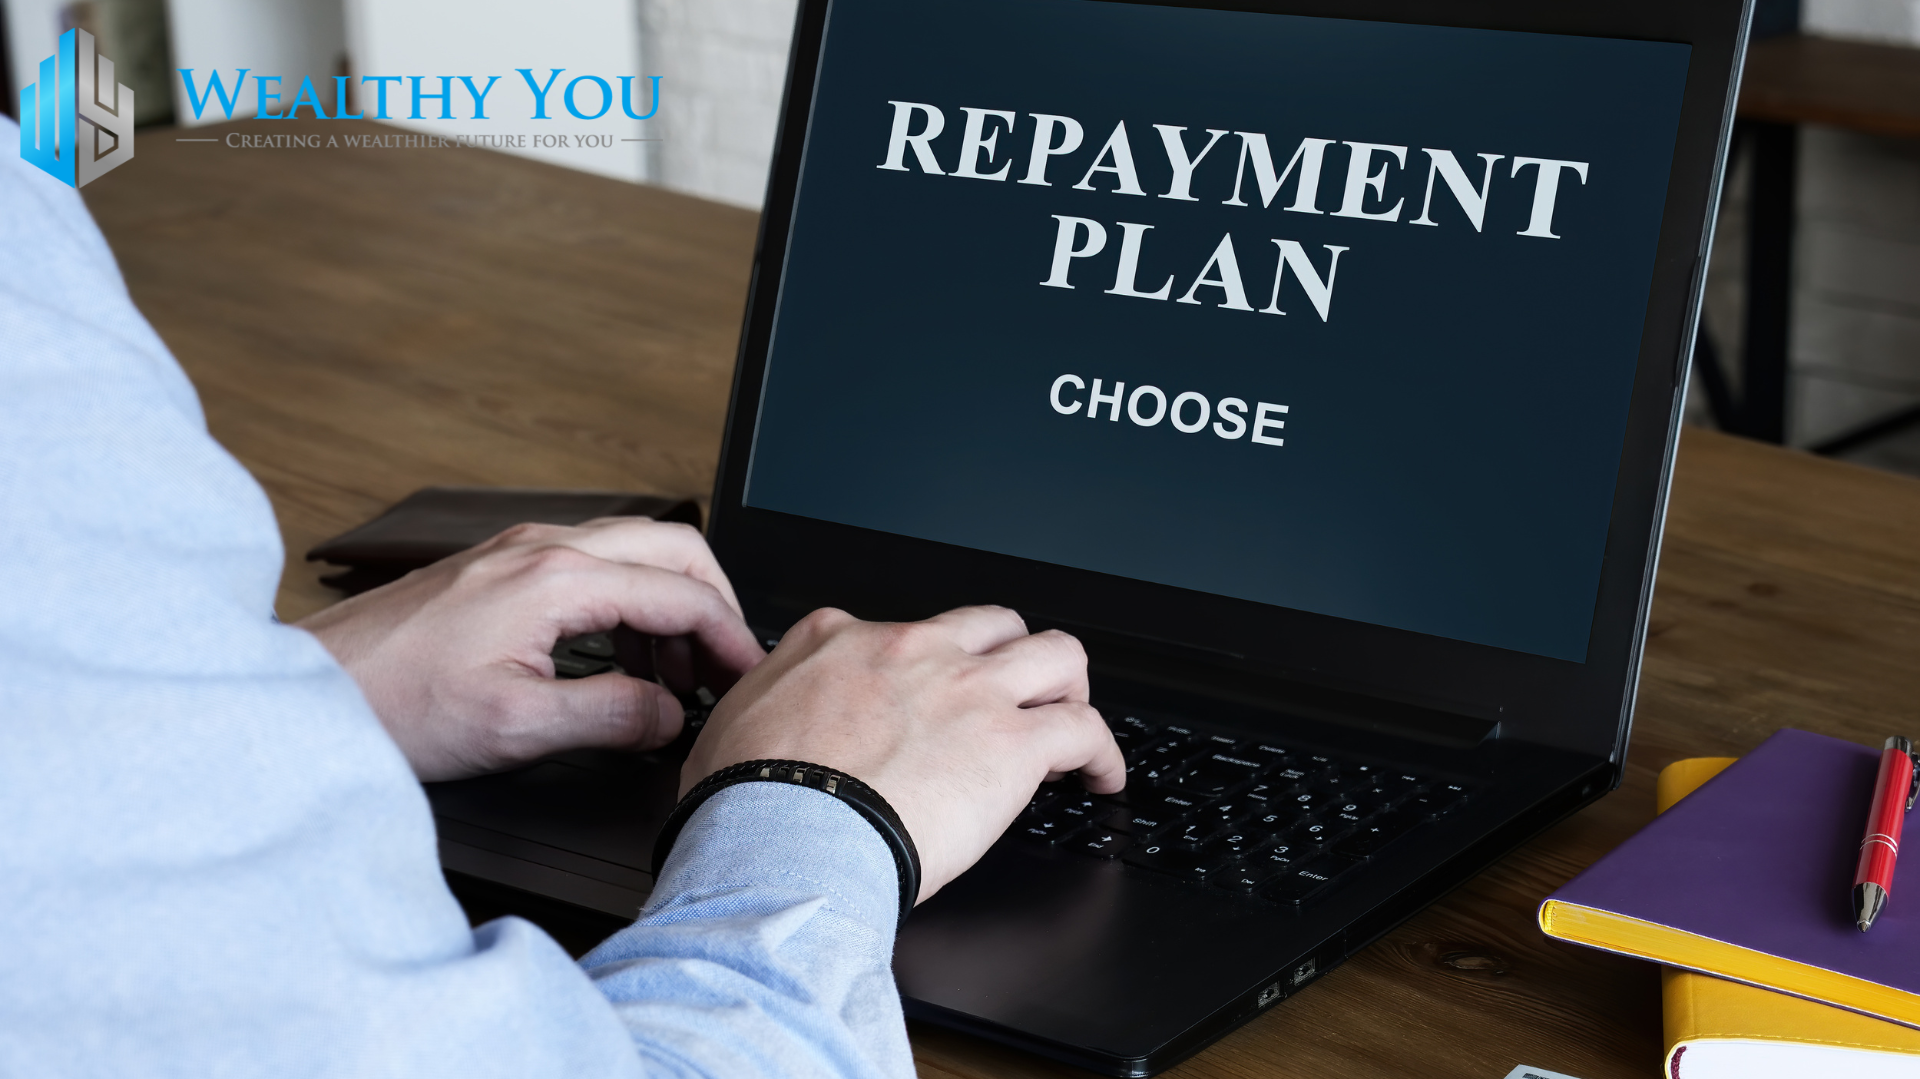 Repayment plan images